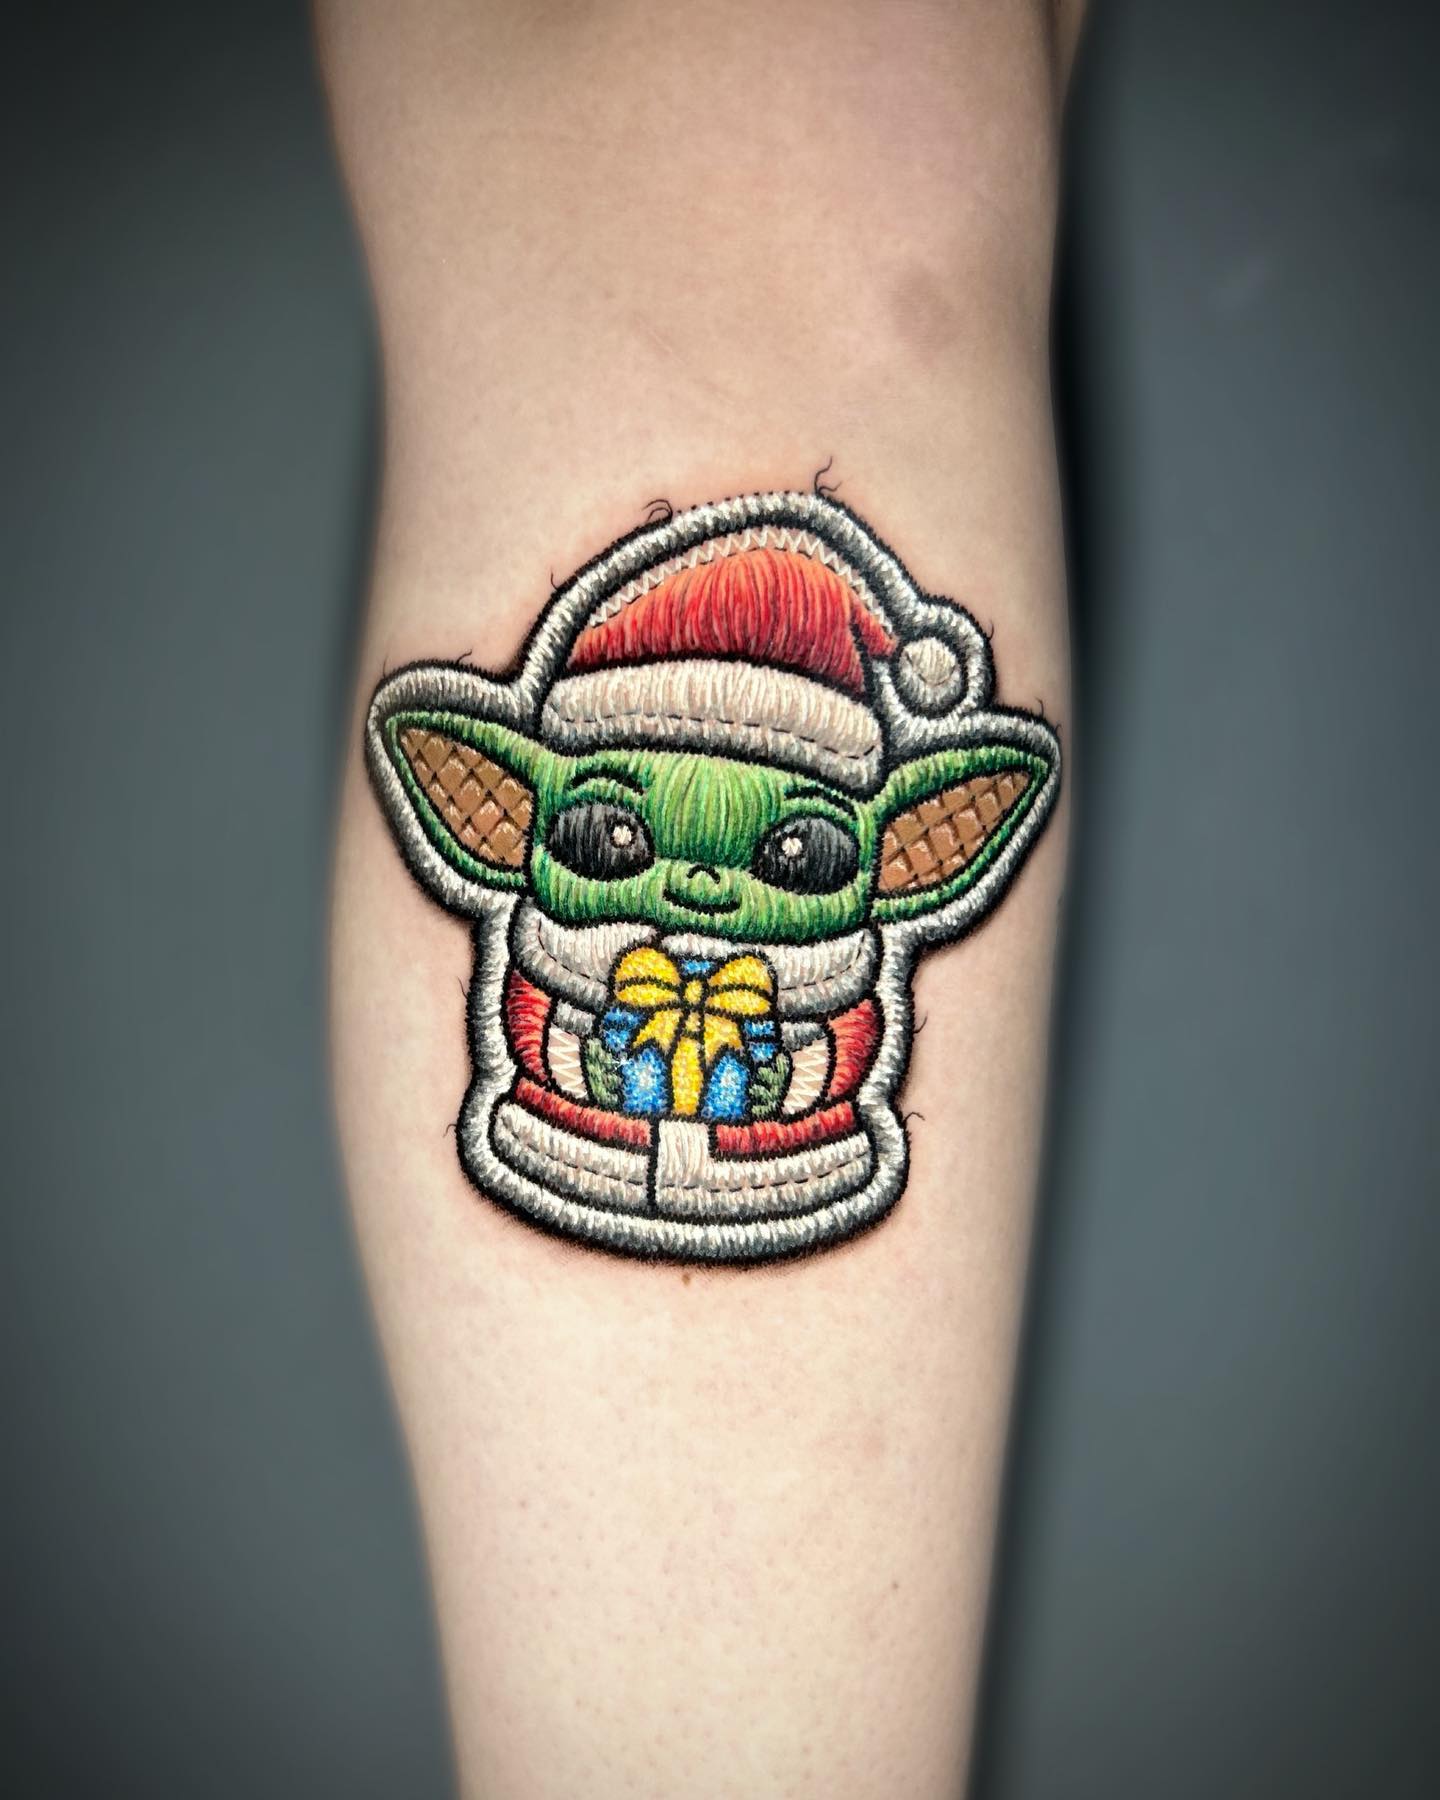 Haftowany tatuaż mistrza Yode